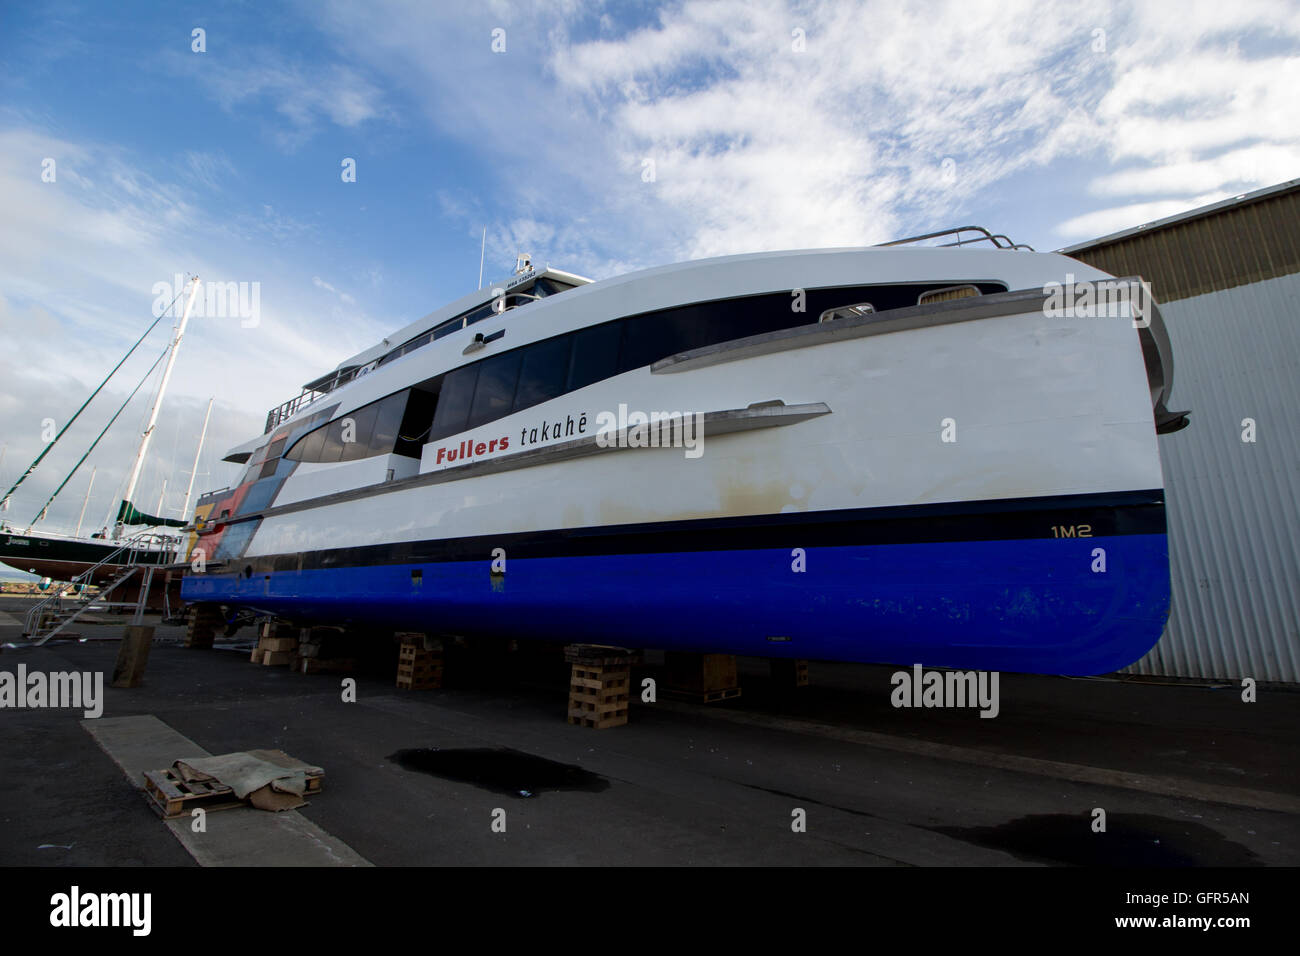 Fulllers Auckland Ferry Takahe in the Whangarei Drydock (Oceania Marine) Stock Photo